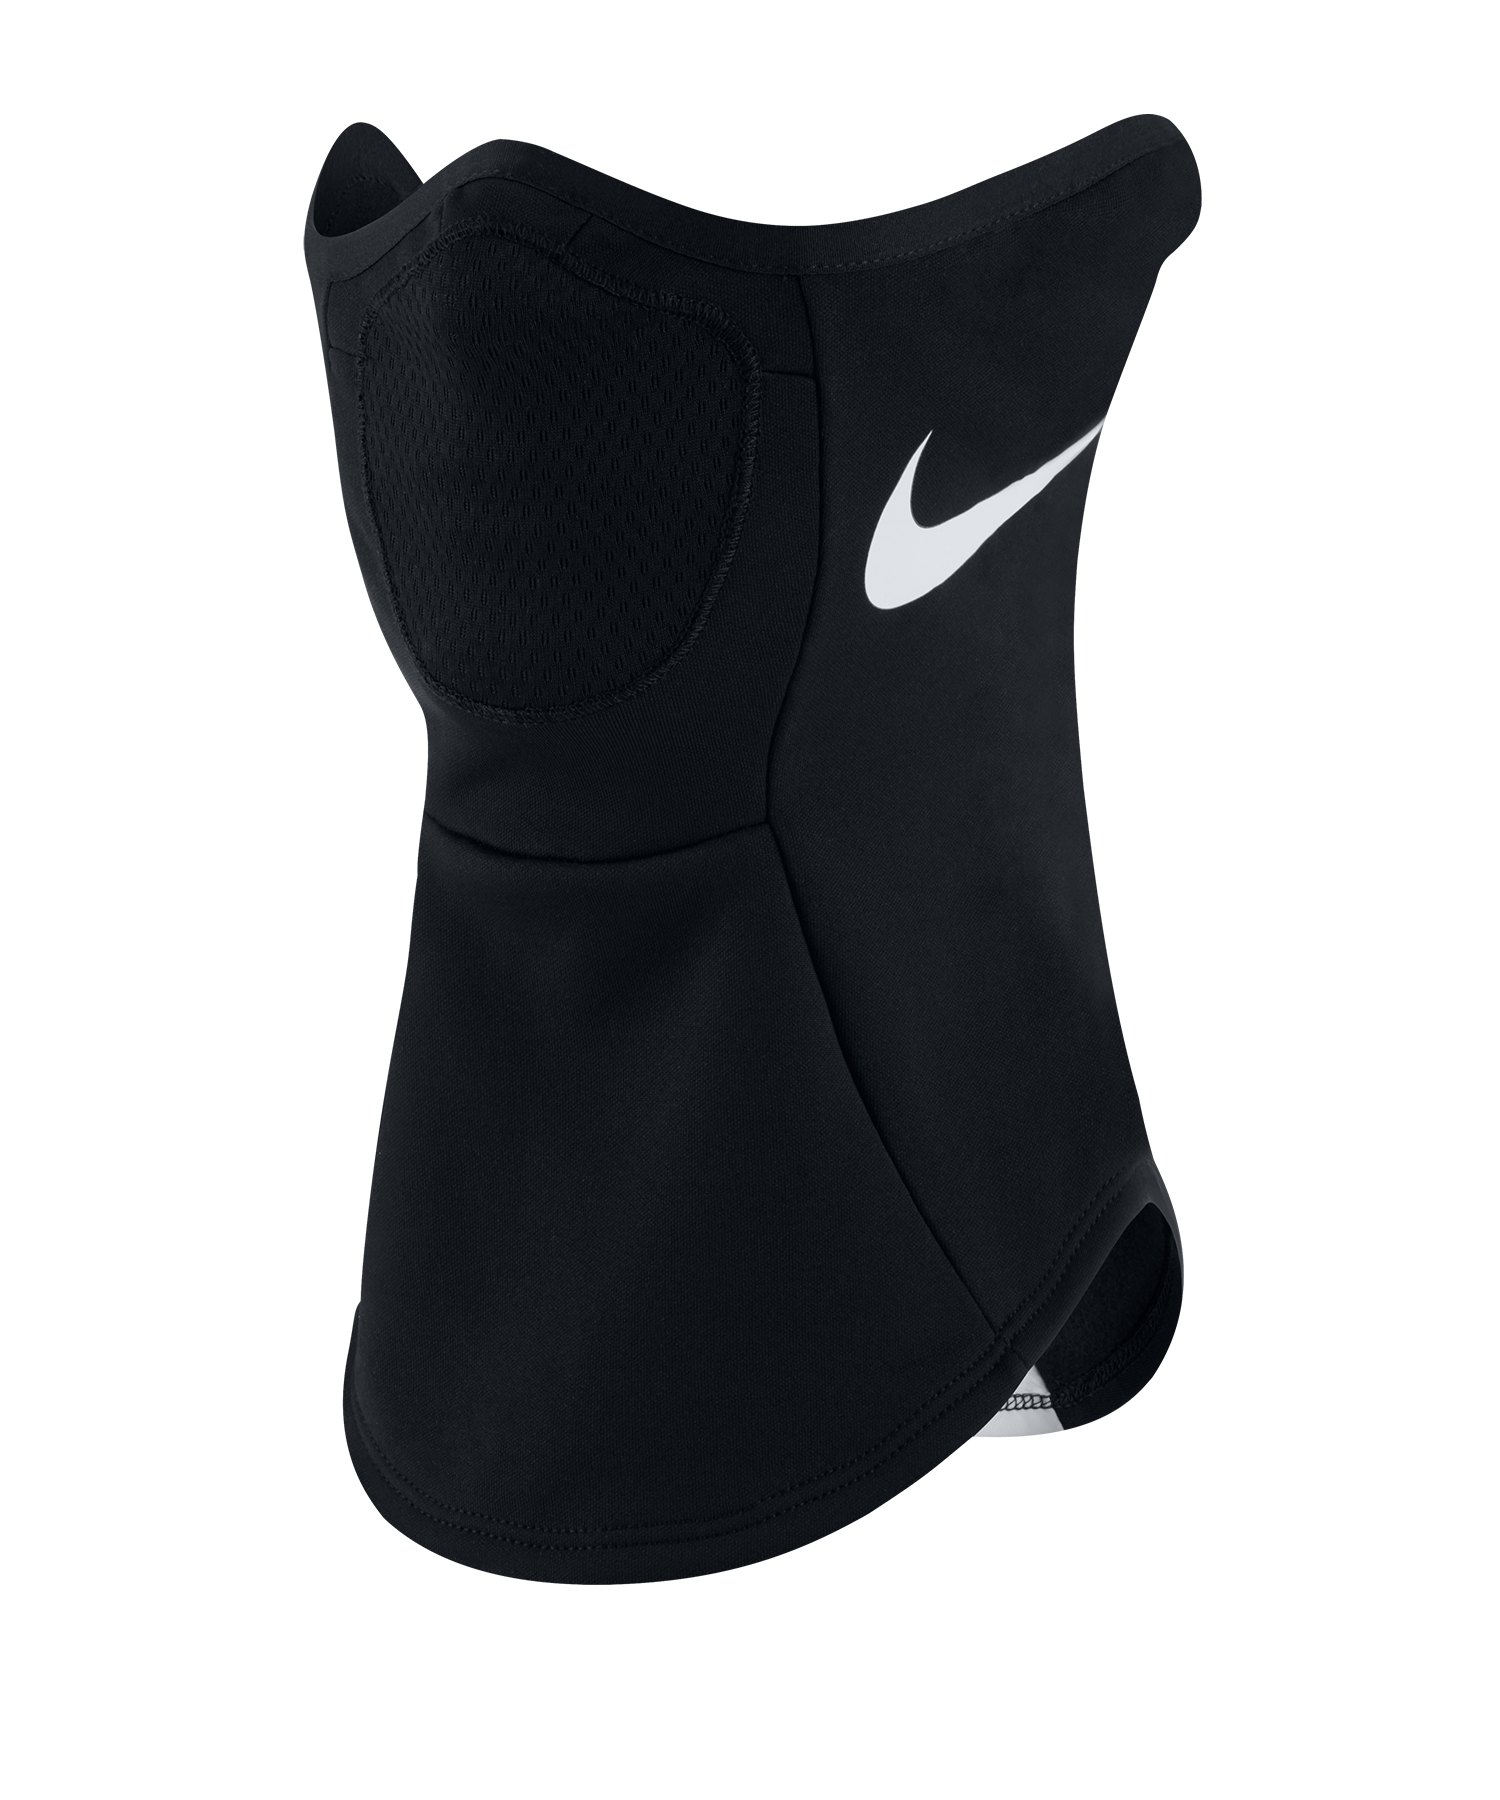 Nike Strike Soccer Snood Neckwarmer Gesichtsmaske Schwarz F013 - schwarz